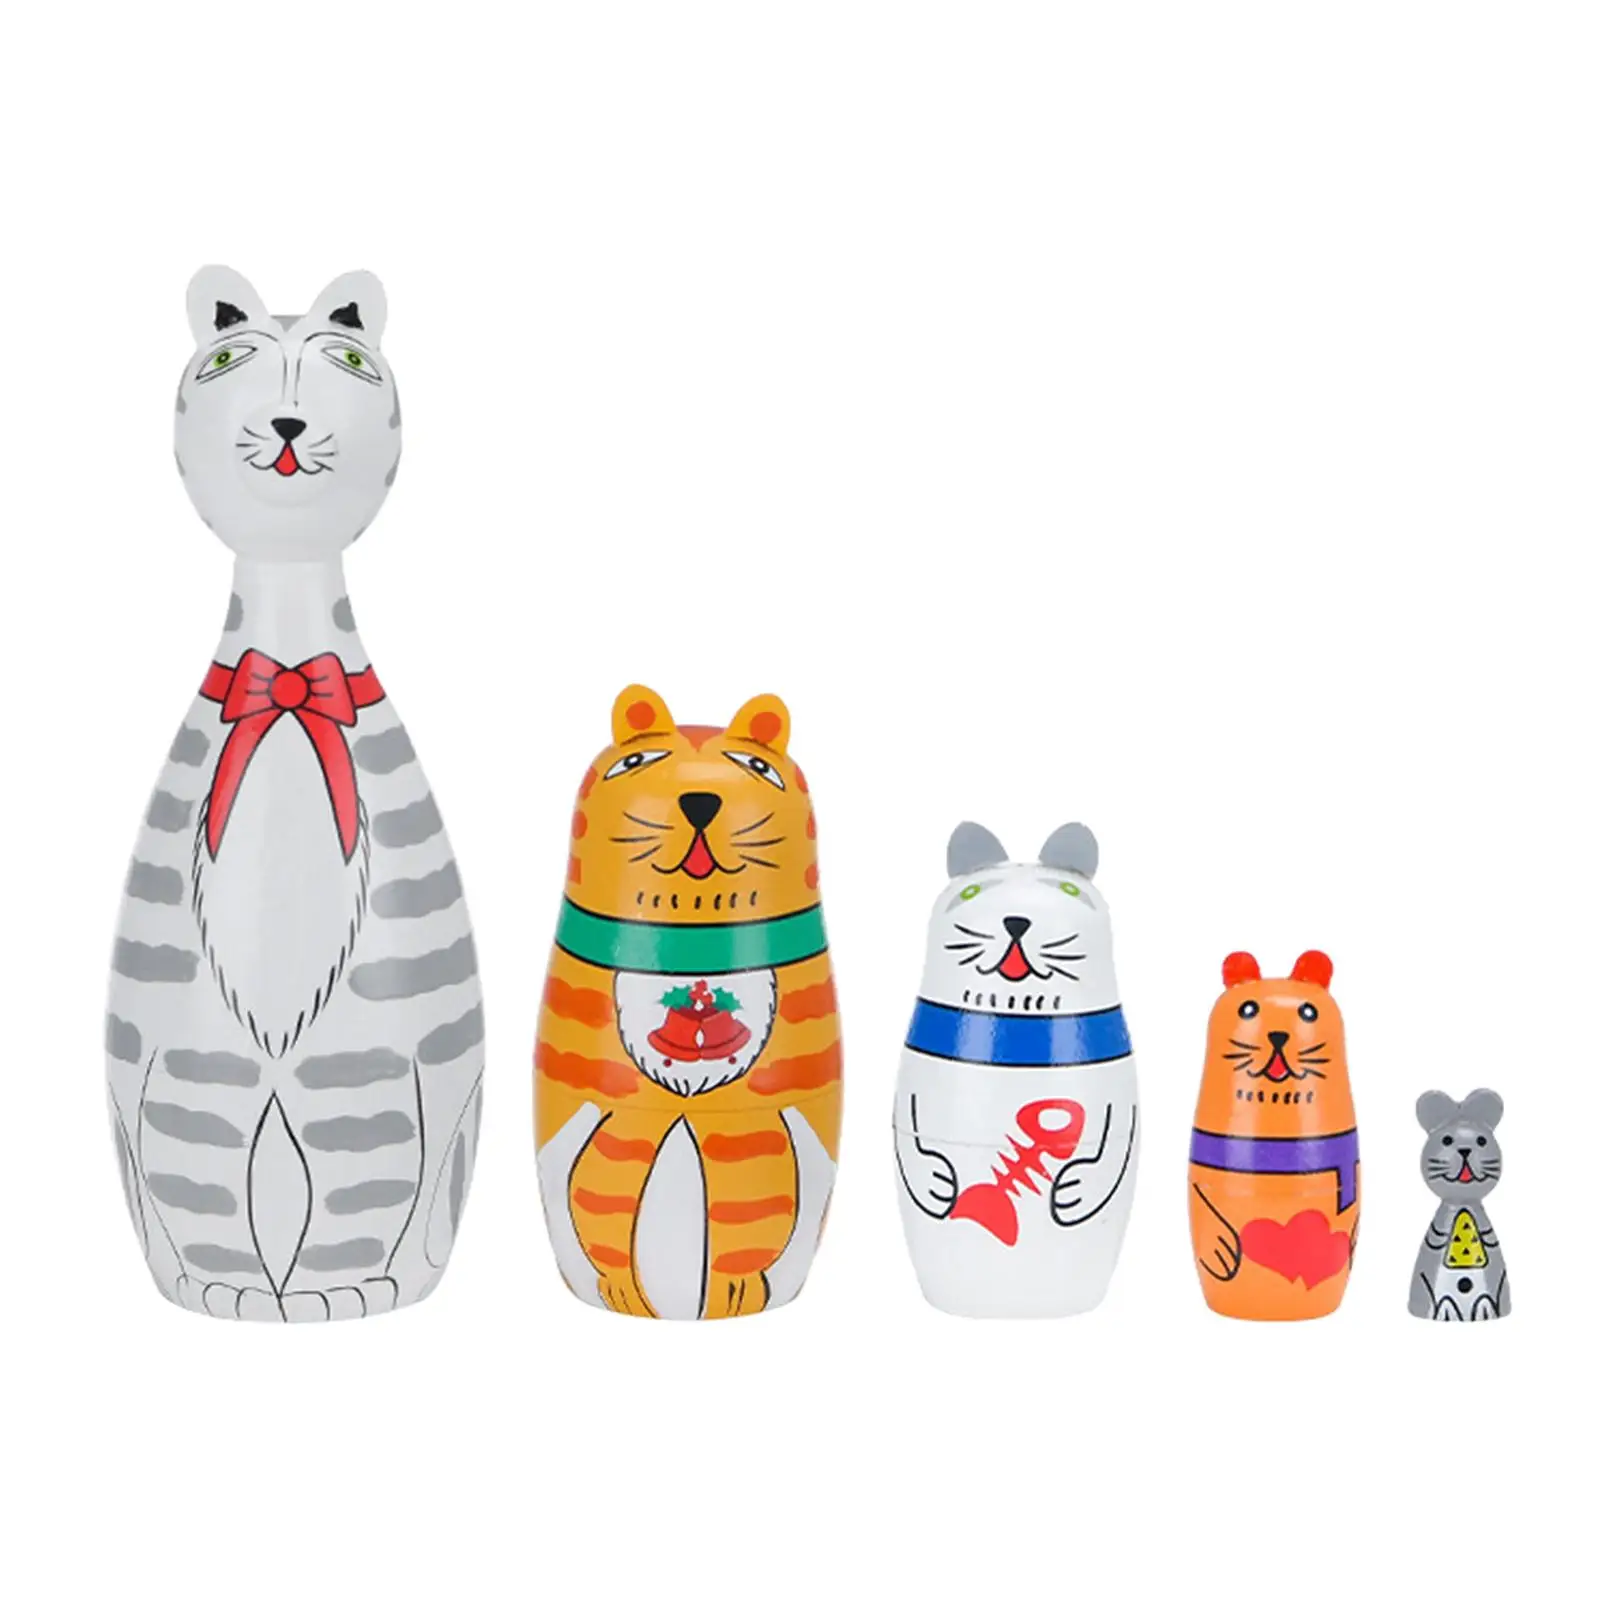 5Pcs Cute Russian Nesting Dolls Ornaments Desk Handmade Animals Matryoshka for Collectible Halloween Kids Wishing Gift Home